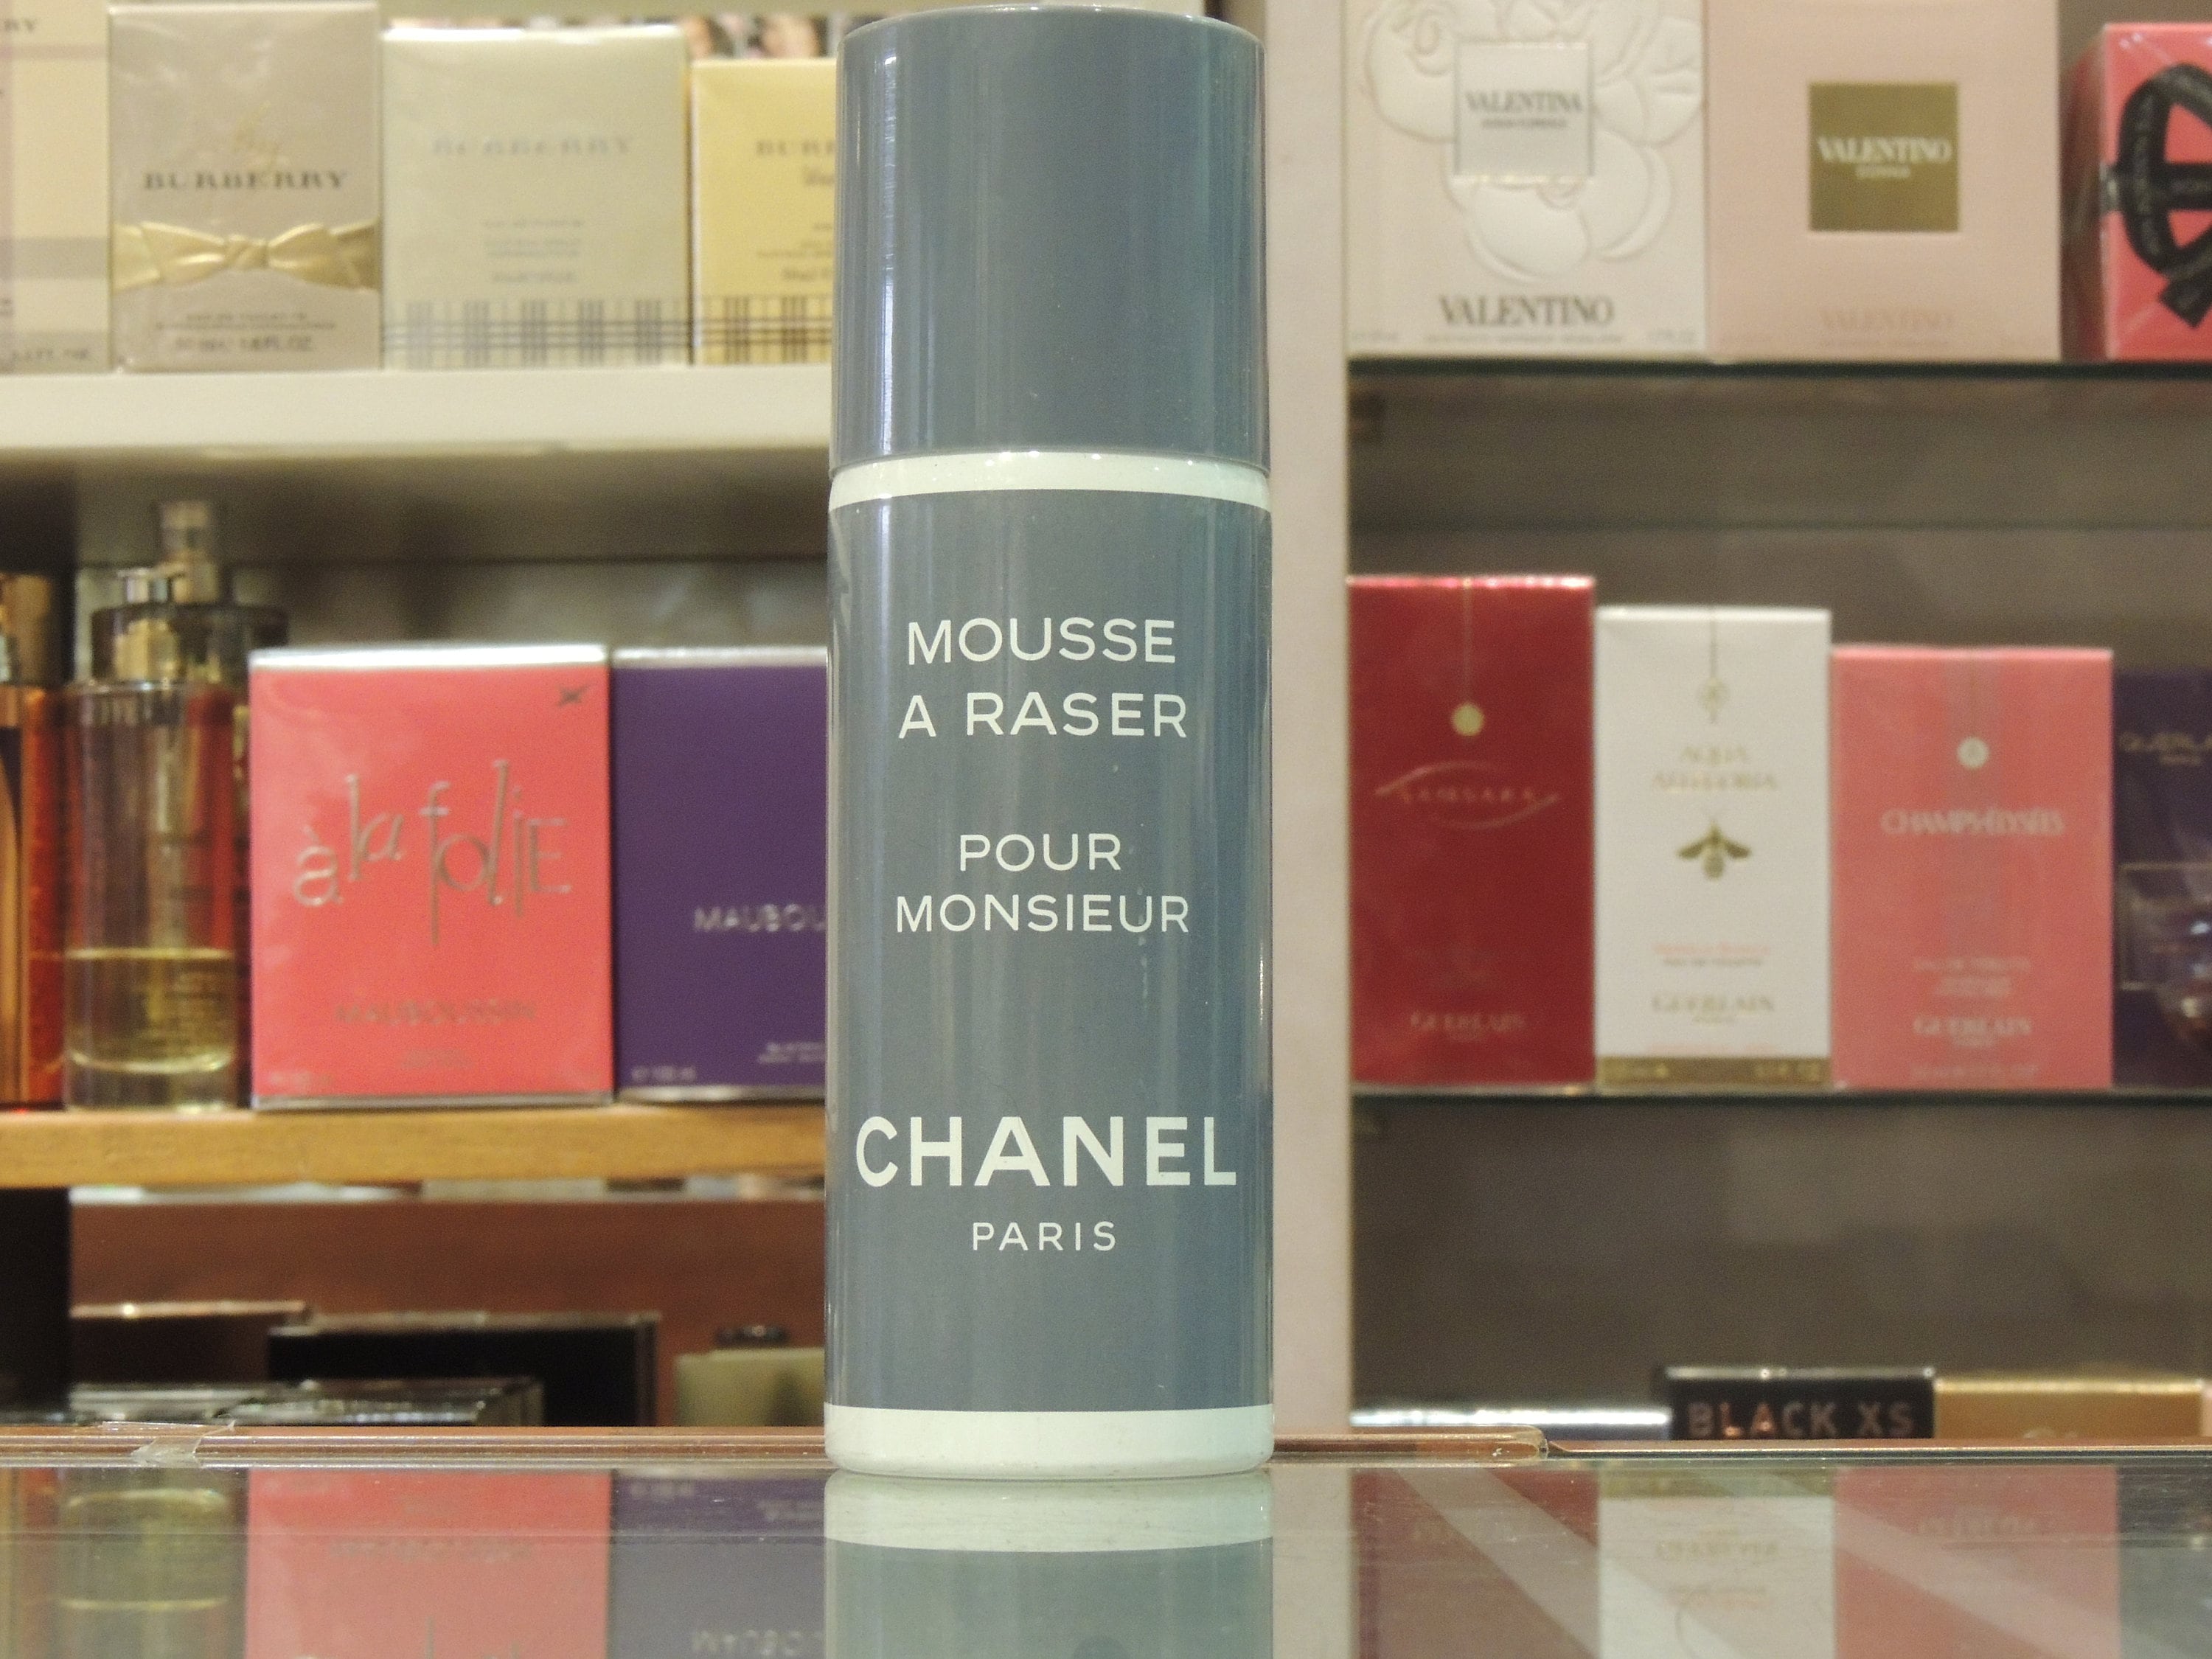 Chanel Pour Monsieur Mousse a Raser / Shaving Foam 150ml -  Sweden